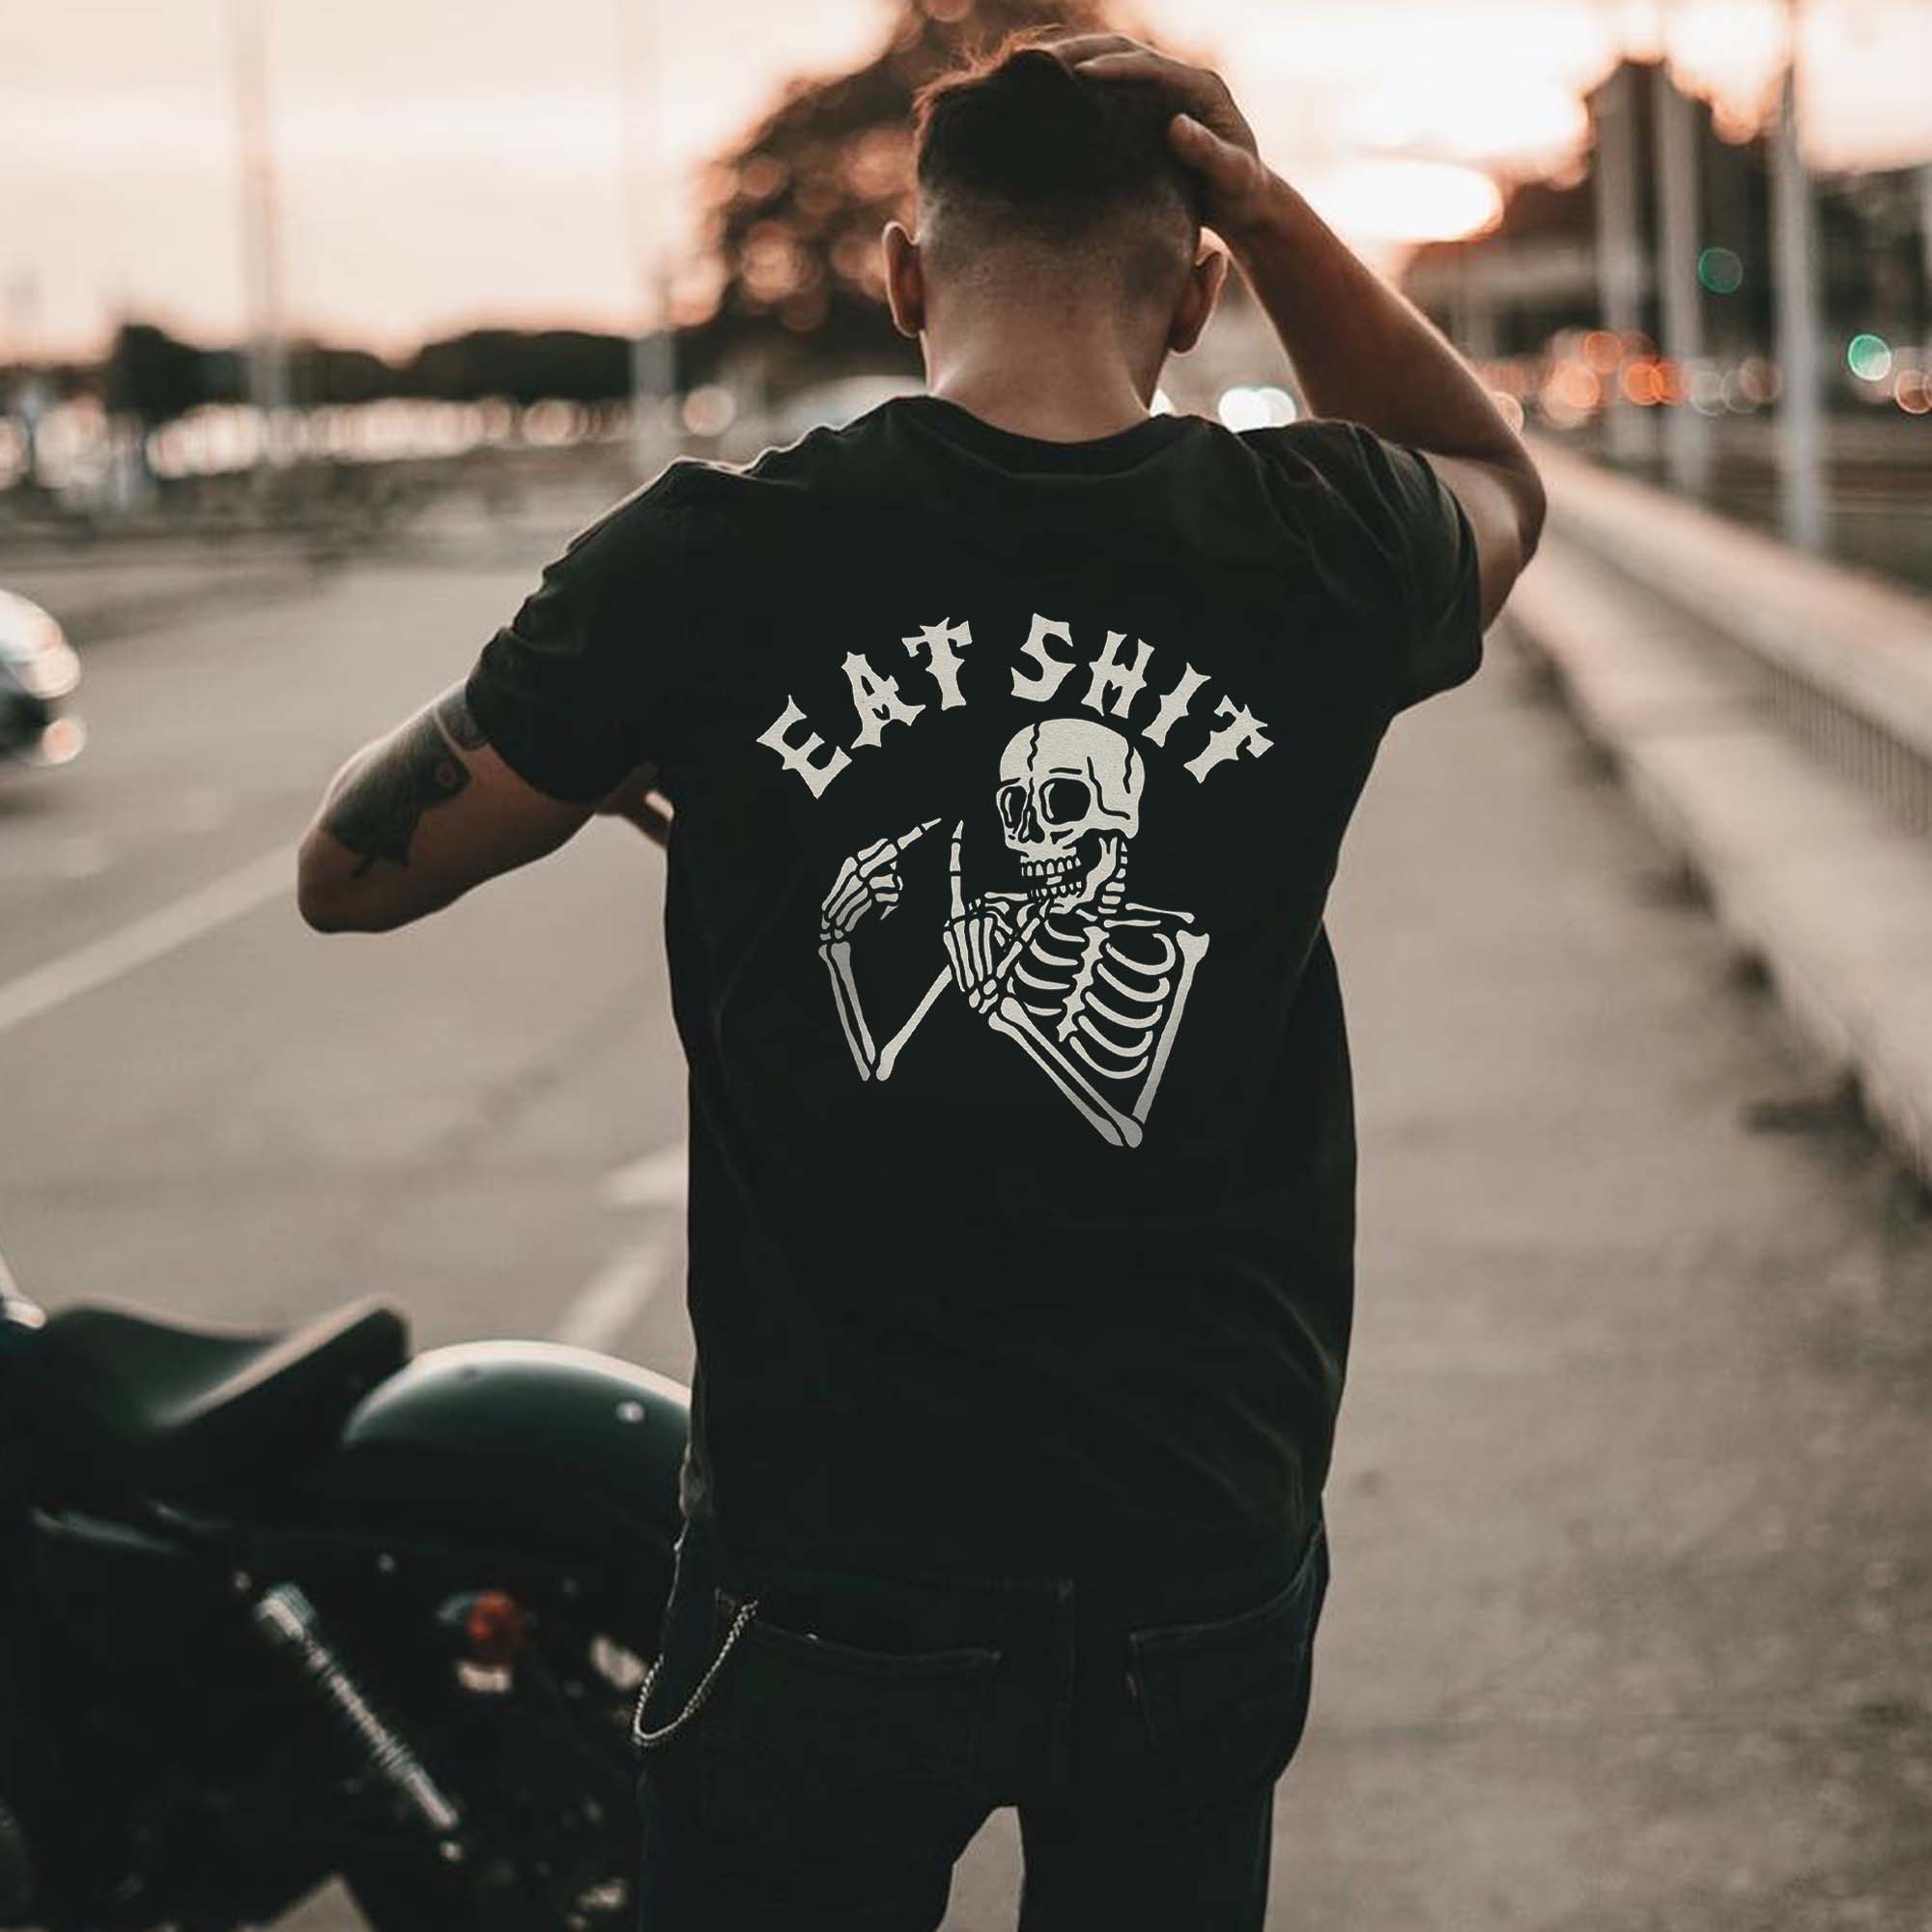 Eat Shif Print Men's T-shirt